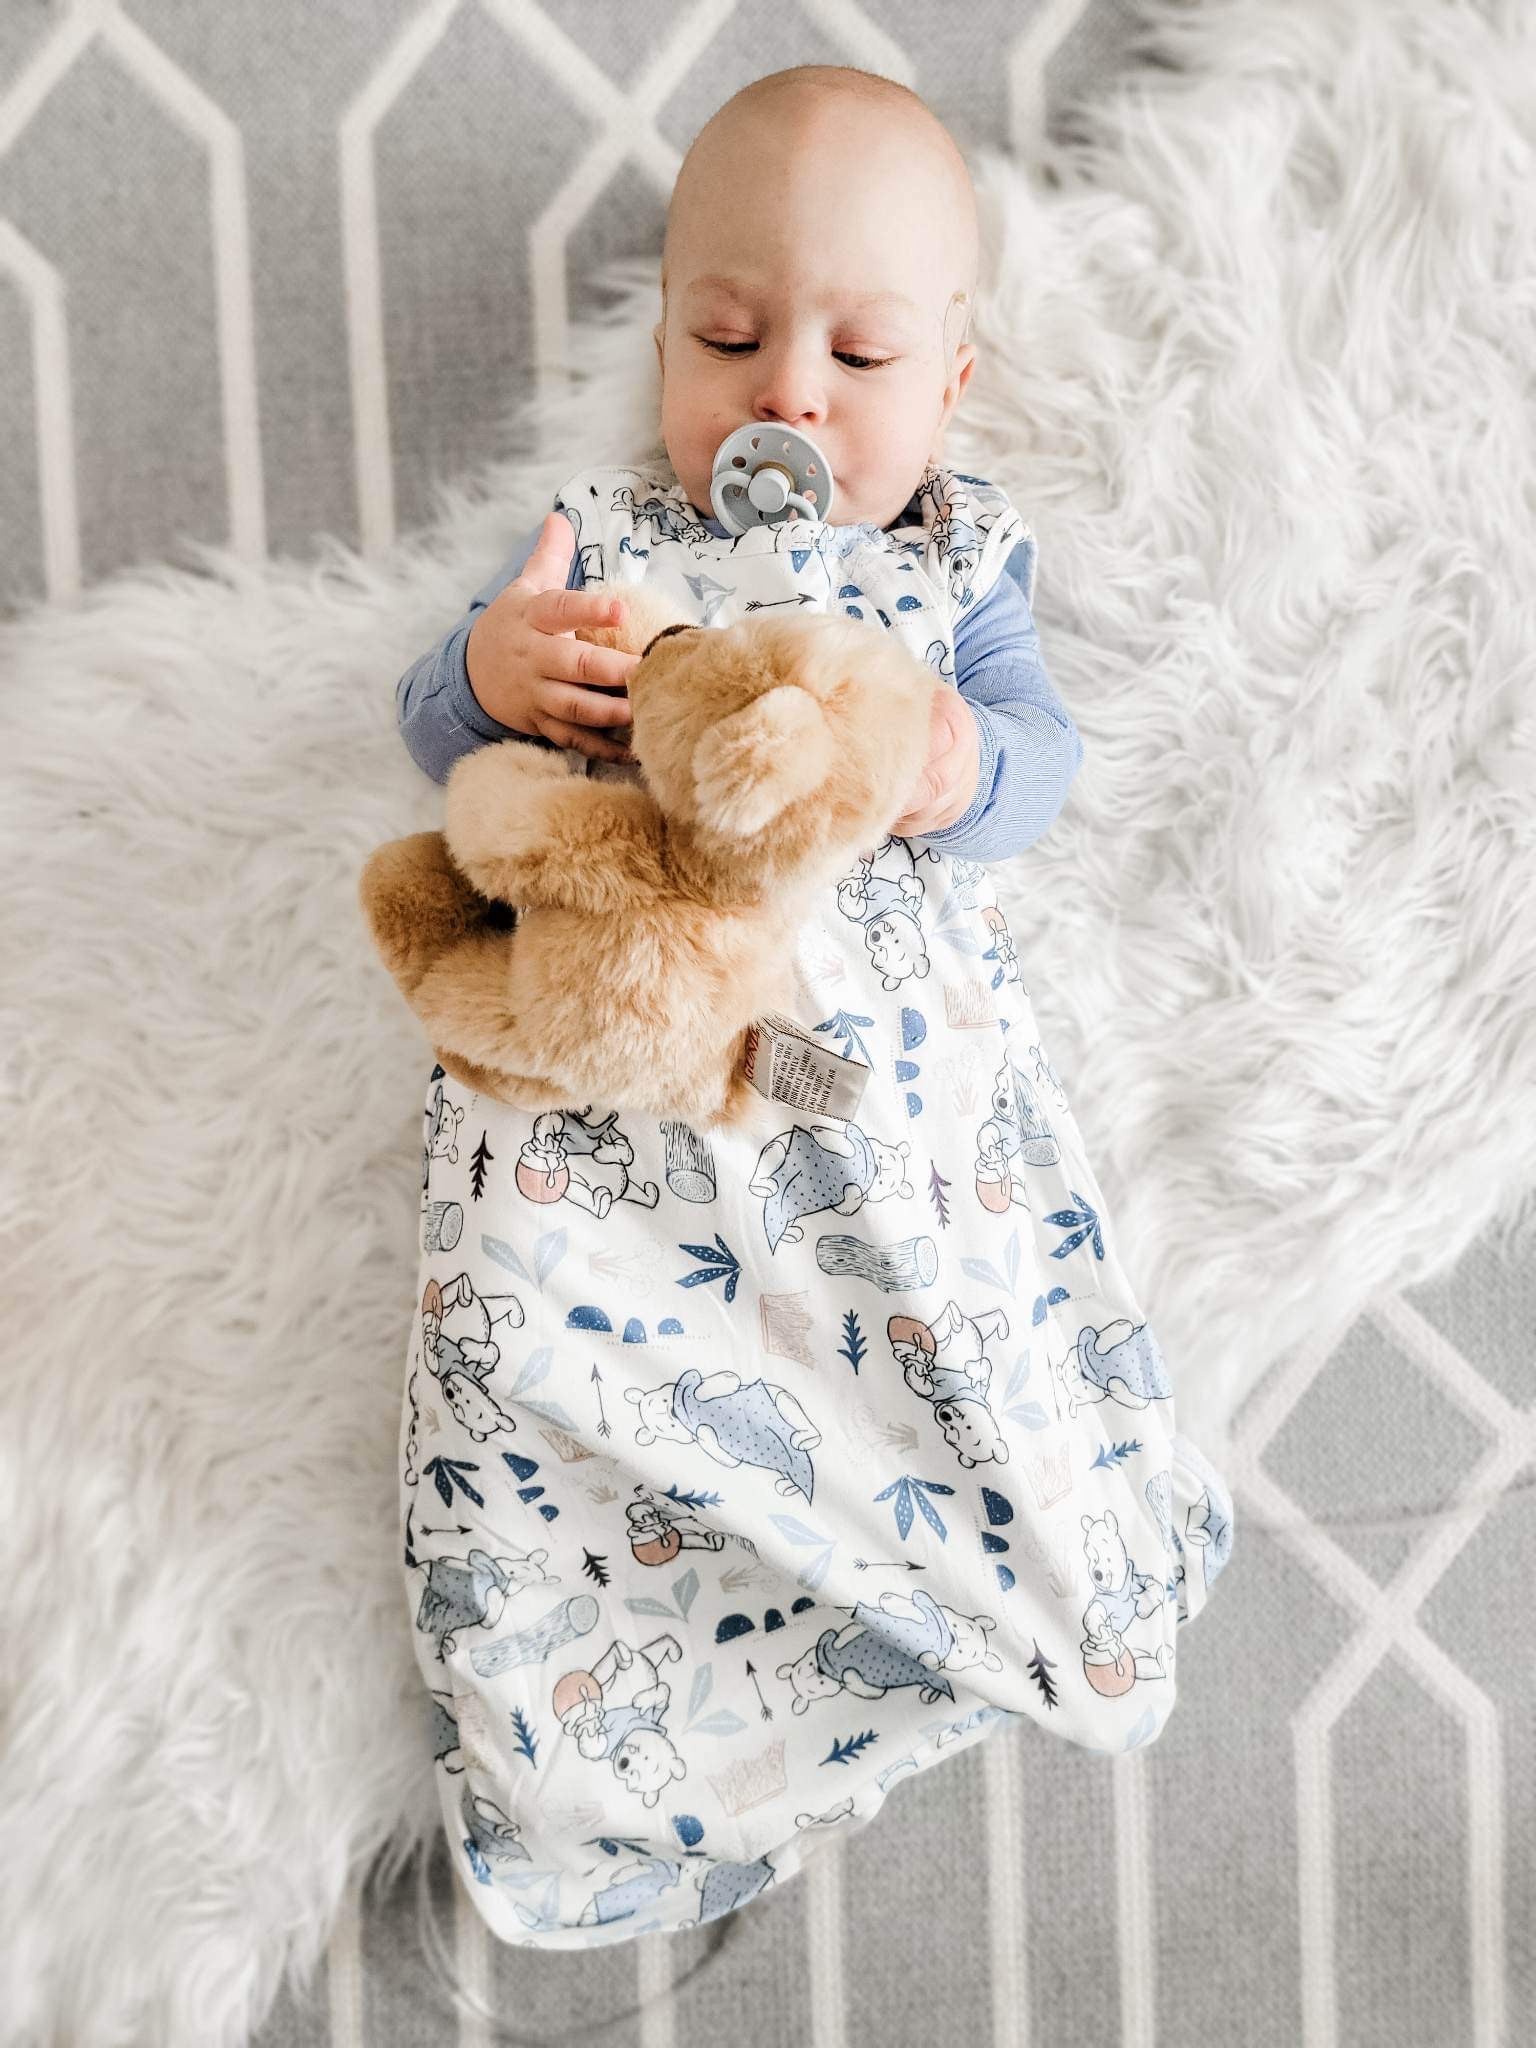 Infant GIrls & Boys Lined Sleep Bags - Pooh Bear - TOG Rating 1.25